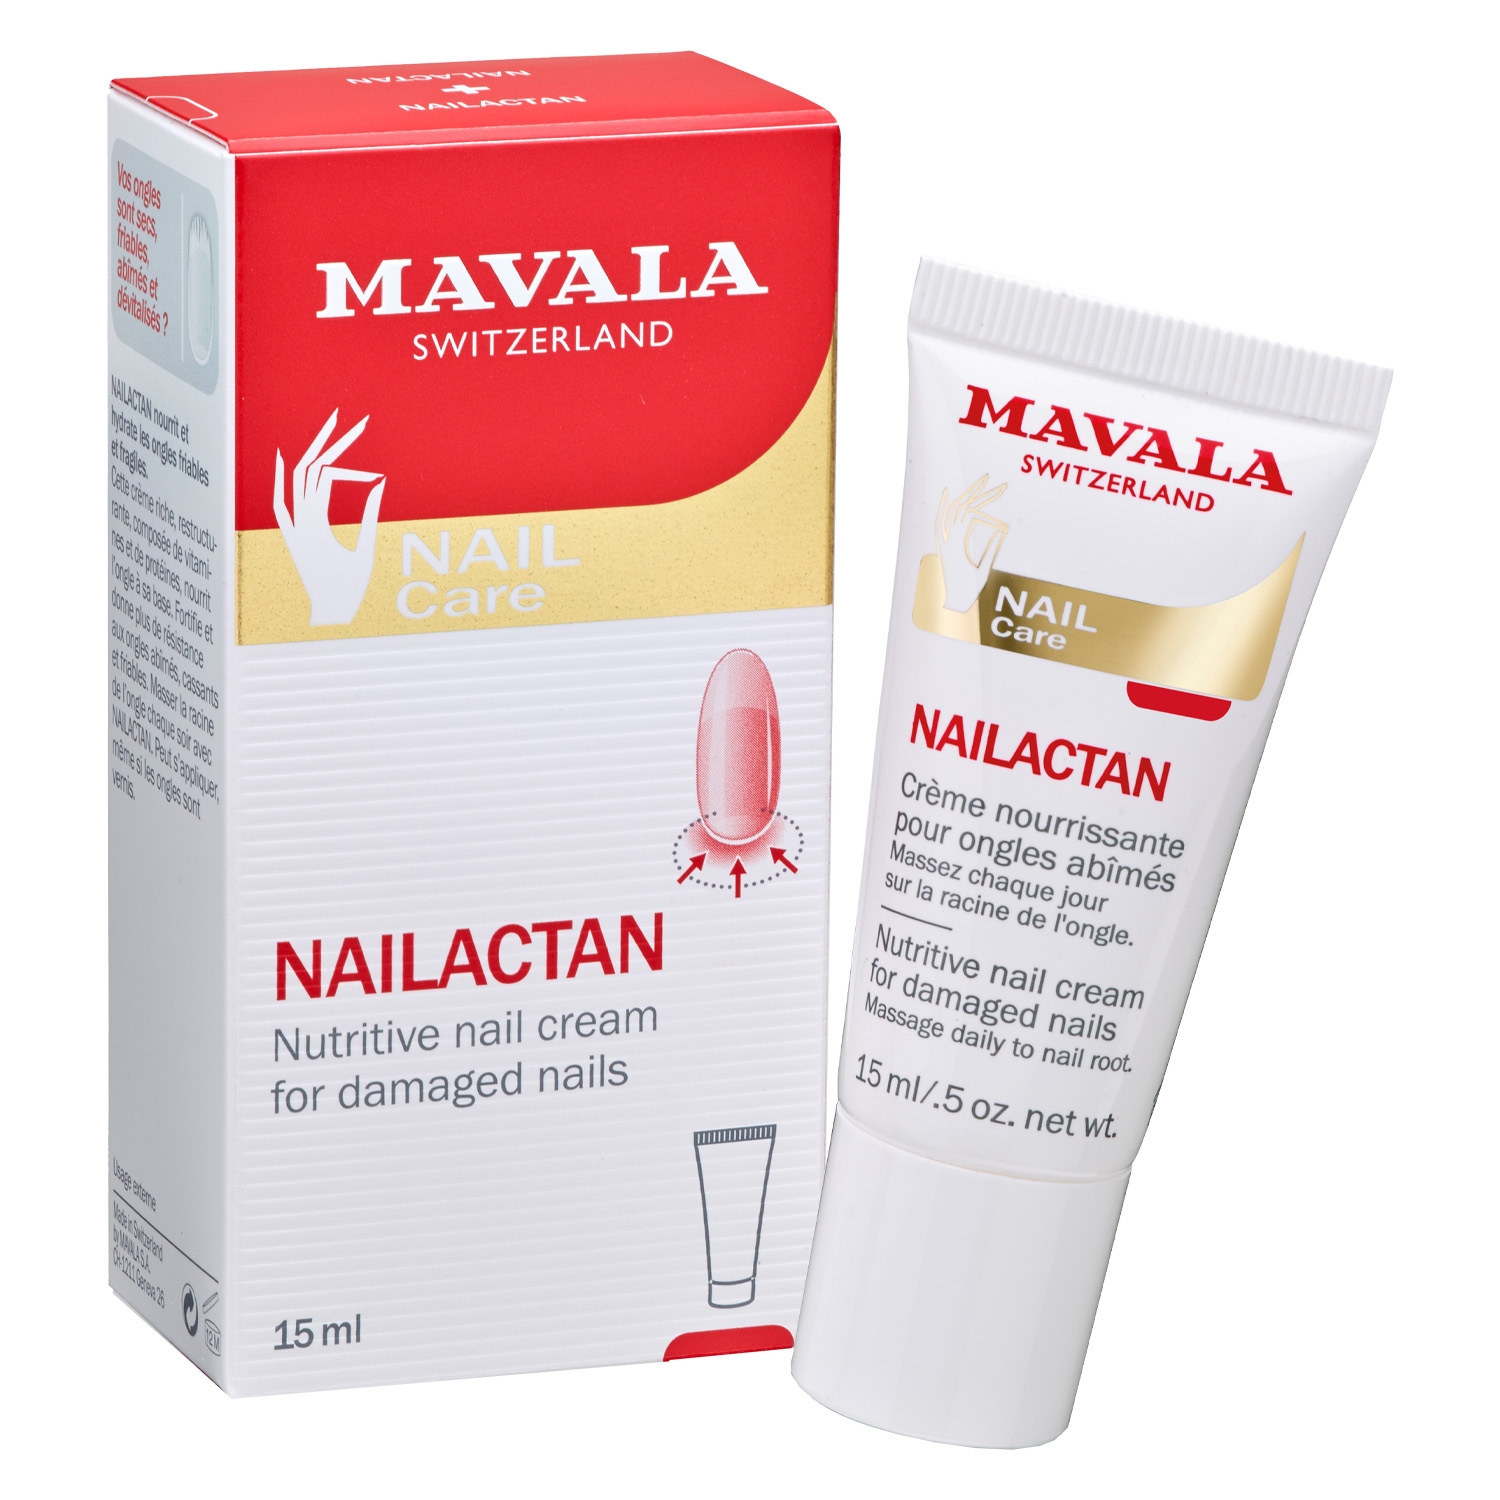 Produktbild von MAVALA Care - Nailactan in Tube